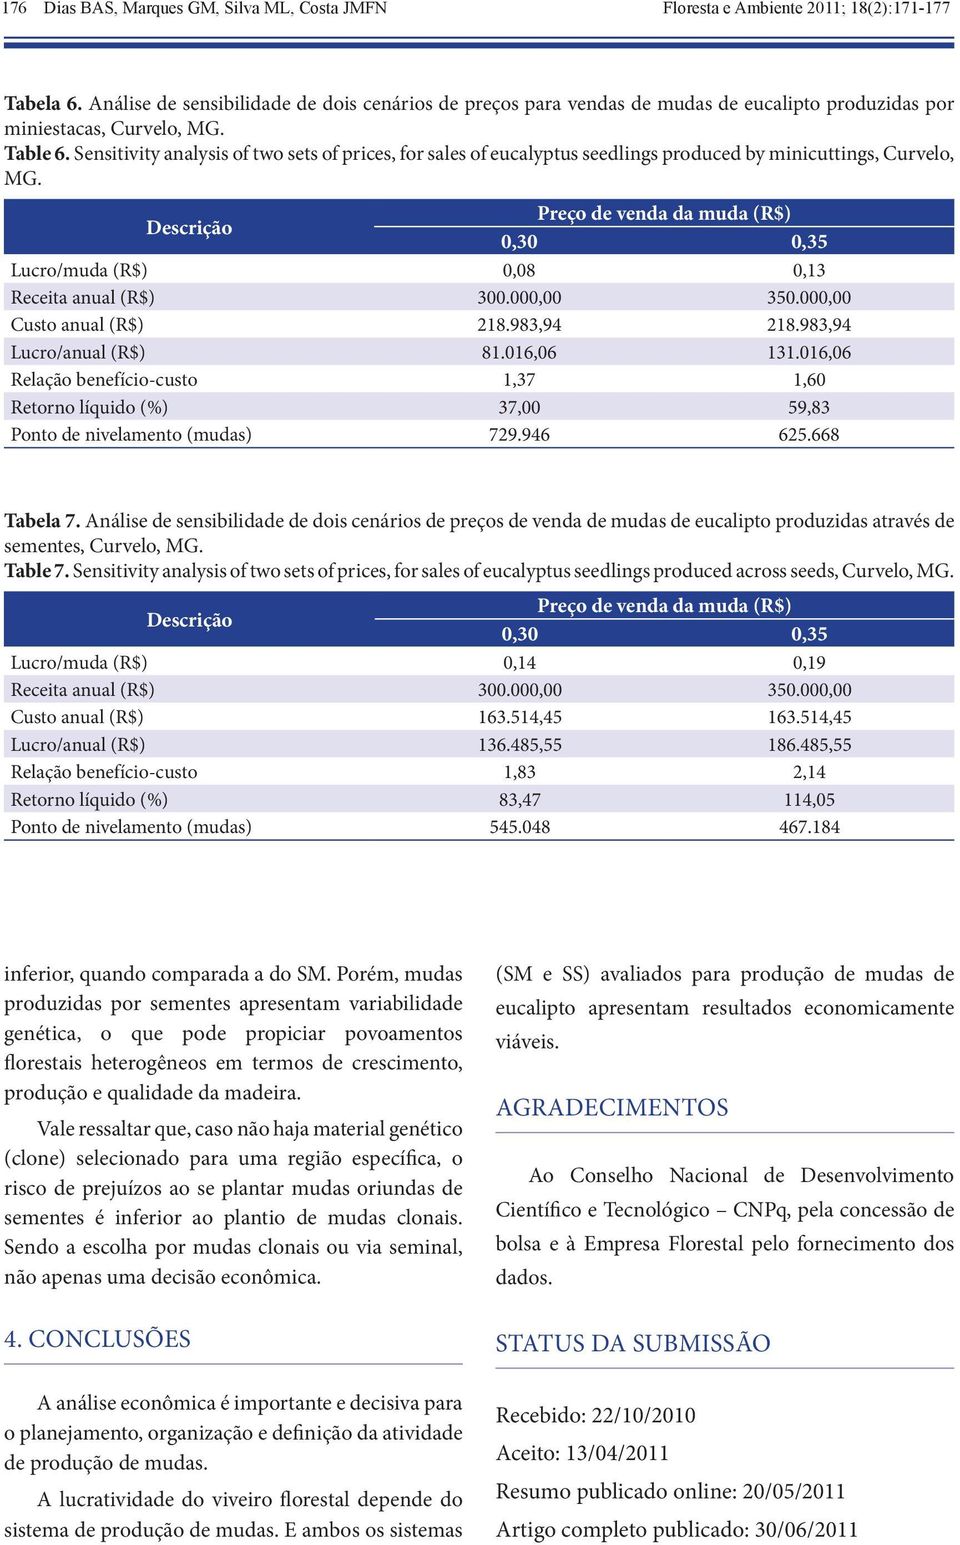 Sensitivity analysis of two sets of prices, for sales of eucalyptus seedlings produced by minicuttings, Curvelo, MG. Preço de venda da muda 0,30 0,35 Lucro/muda 0,08 0,13 Receita anual 300.000,00 350.